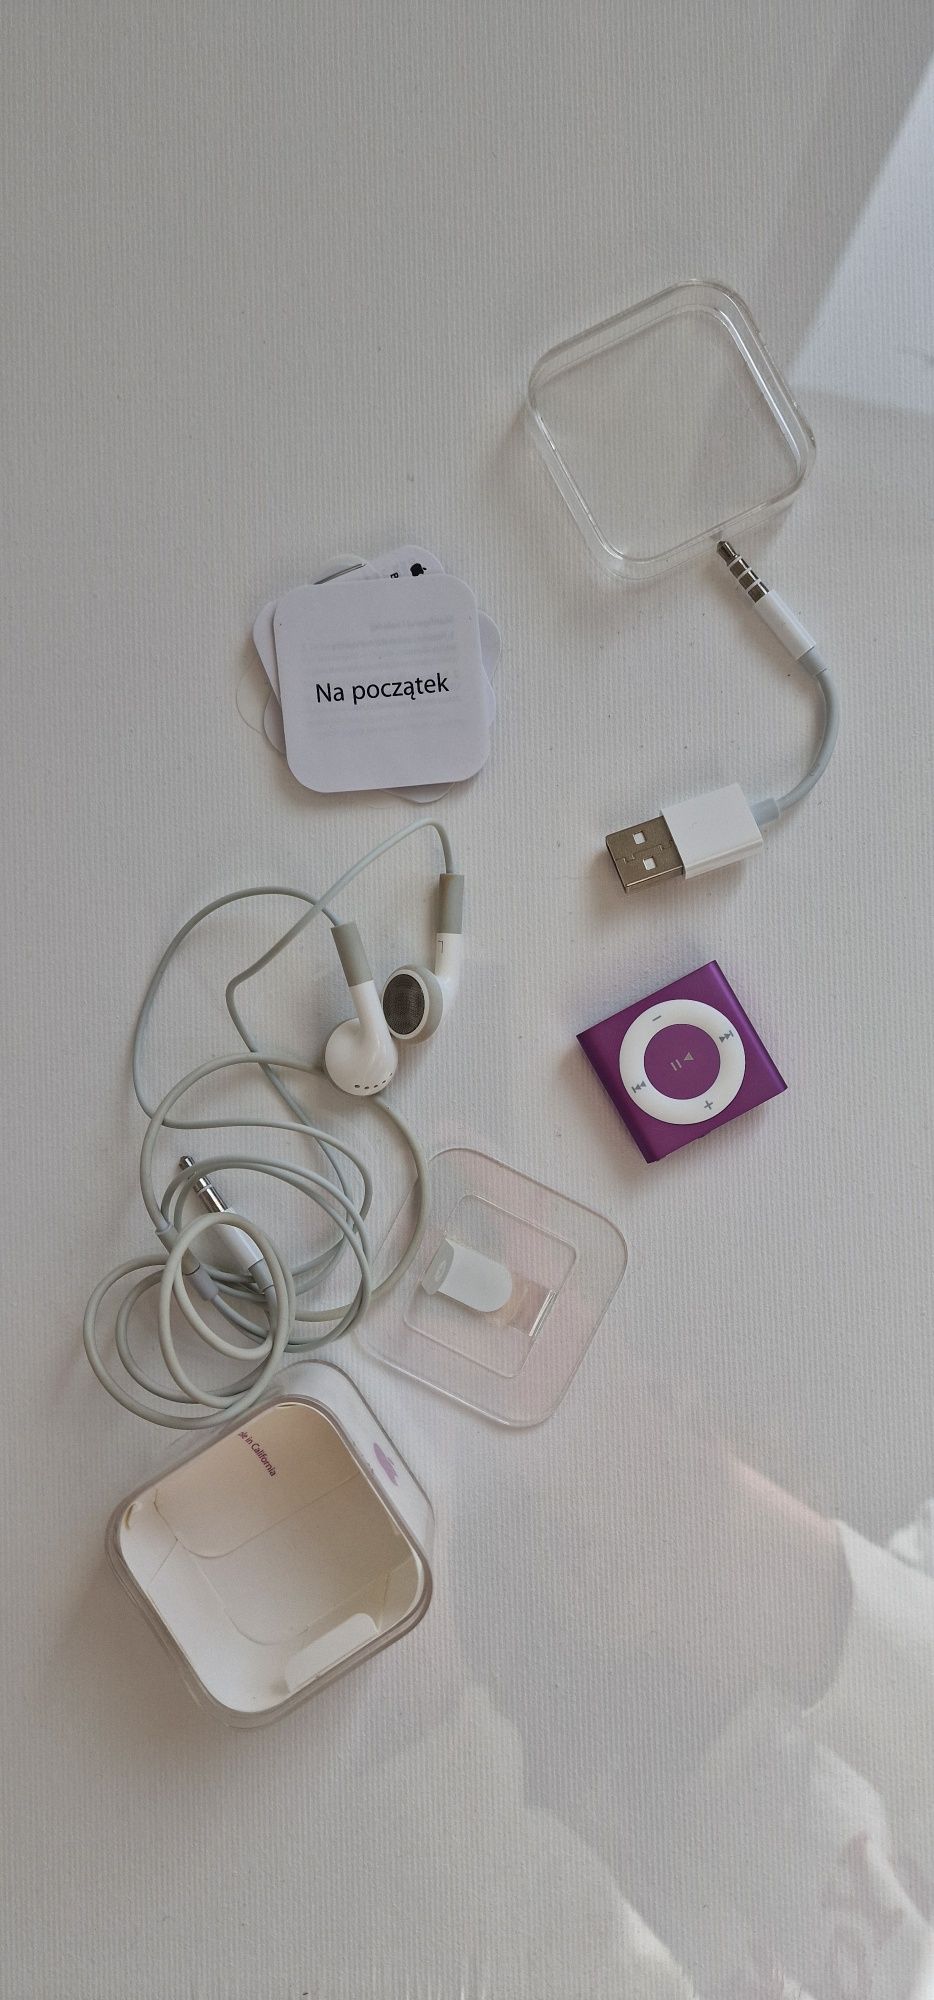 iPod Apple shuffle 2GB fioletowy